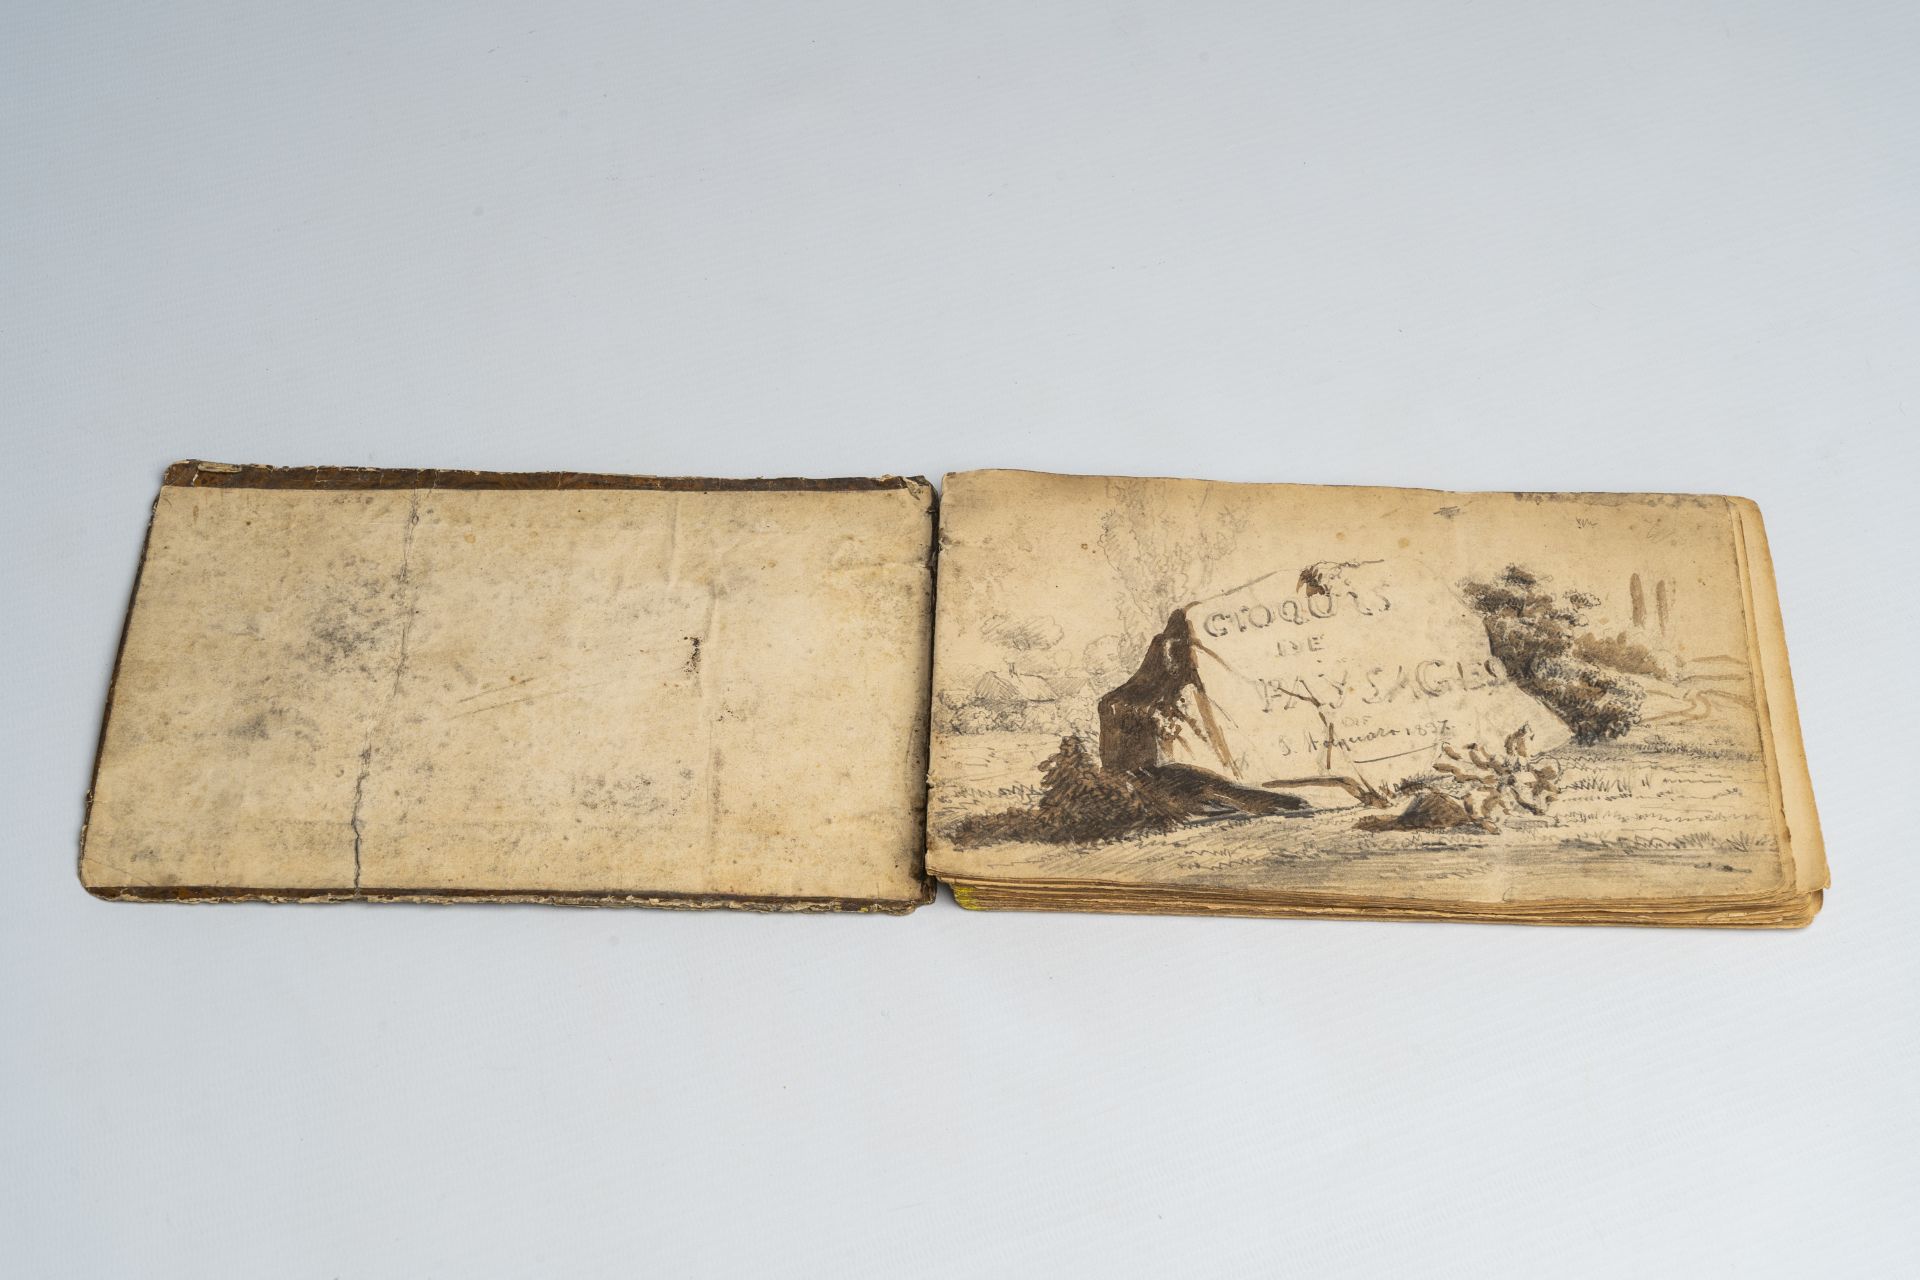 Ildephonse Stocquart (1819-1889): 'Croquis de paysage', sketchbook, pencil and watercolour on paper,